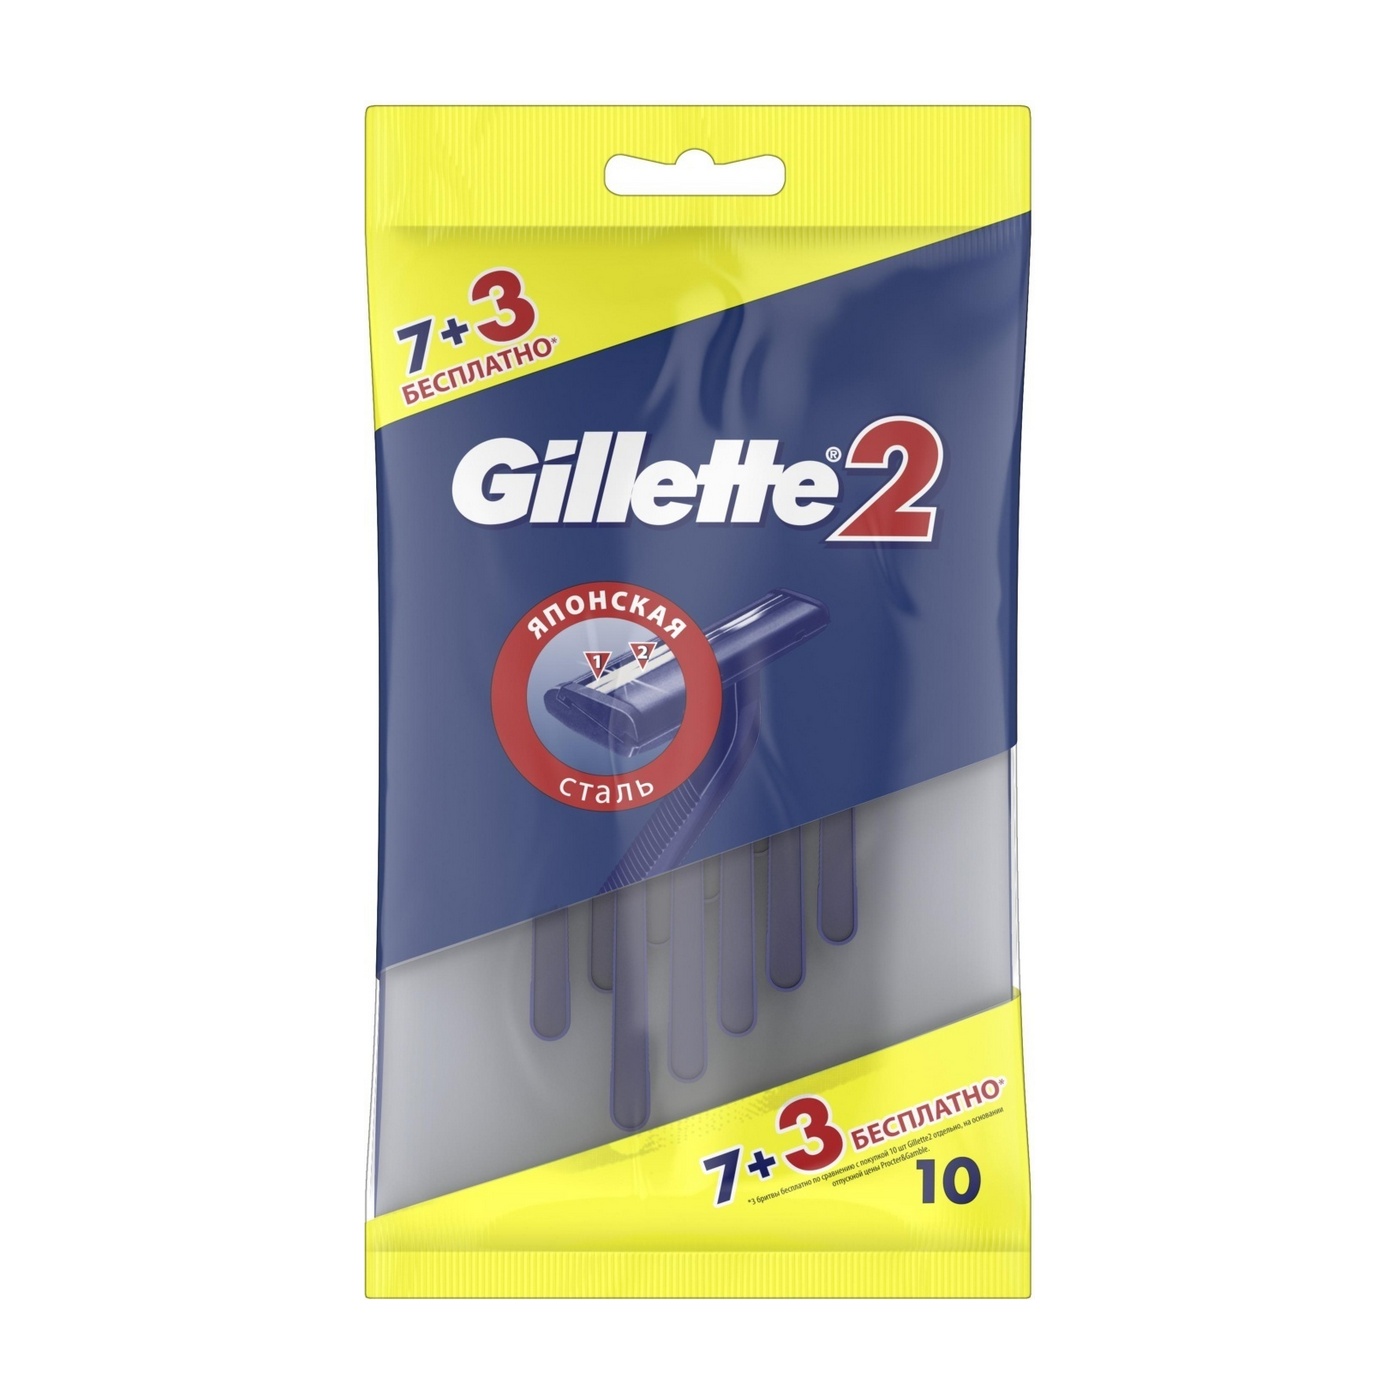 Gillette2, станки одноразовые для бритья, 7 + 3 шт. 